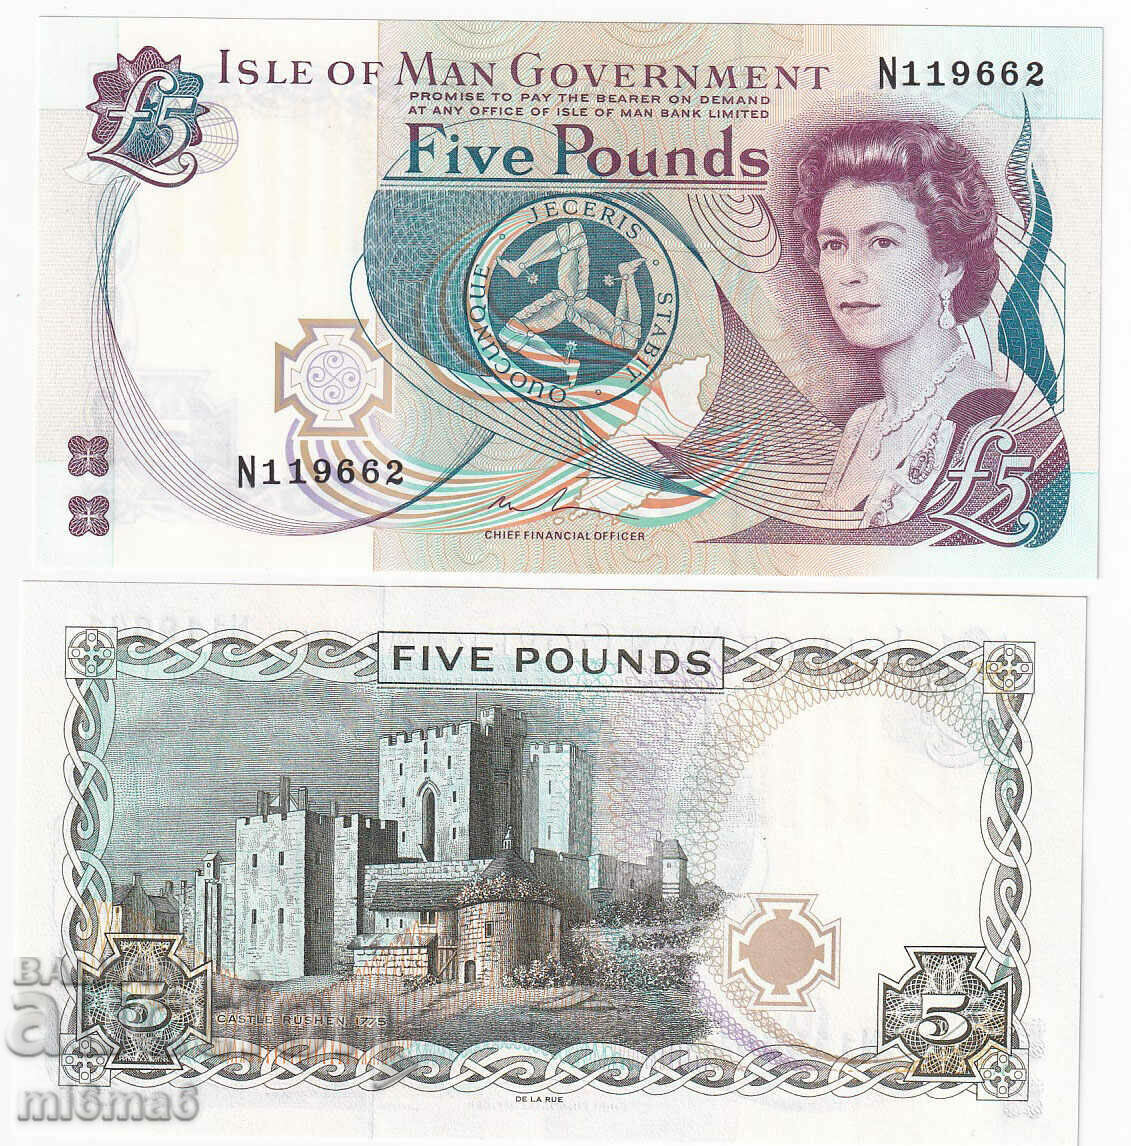 MI6MA6 - Isle of Man £5